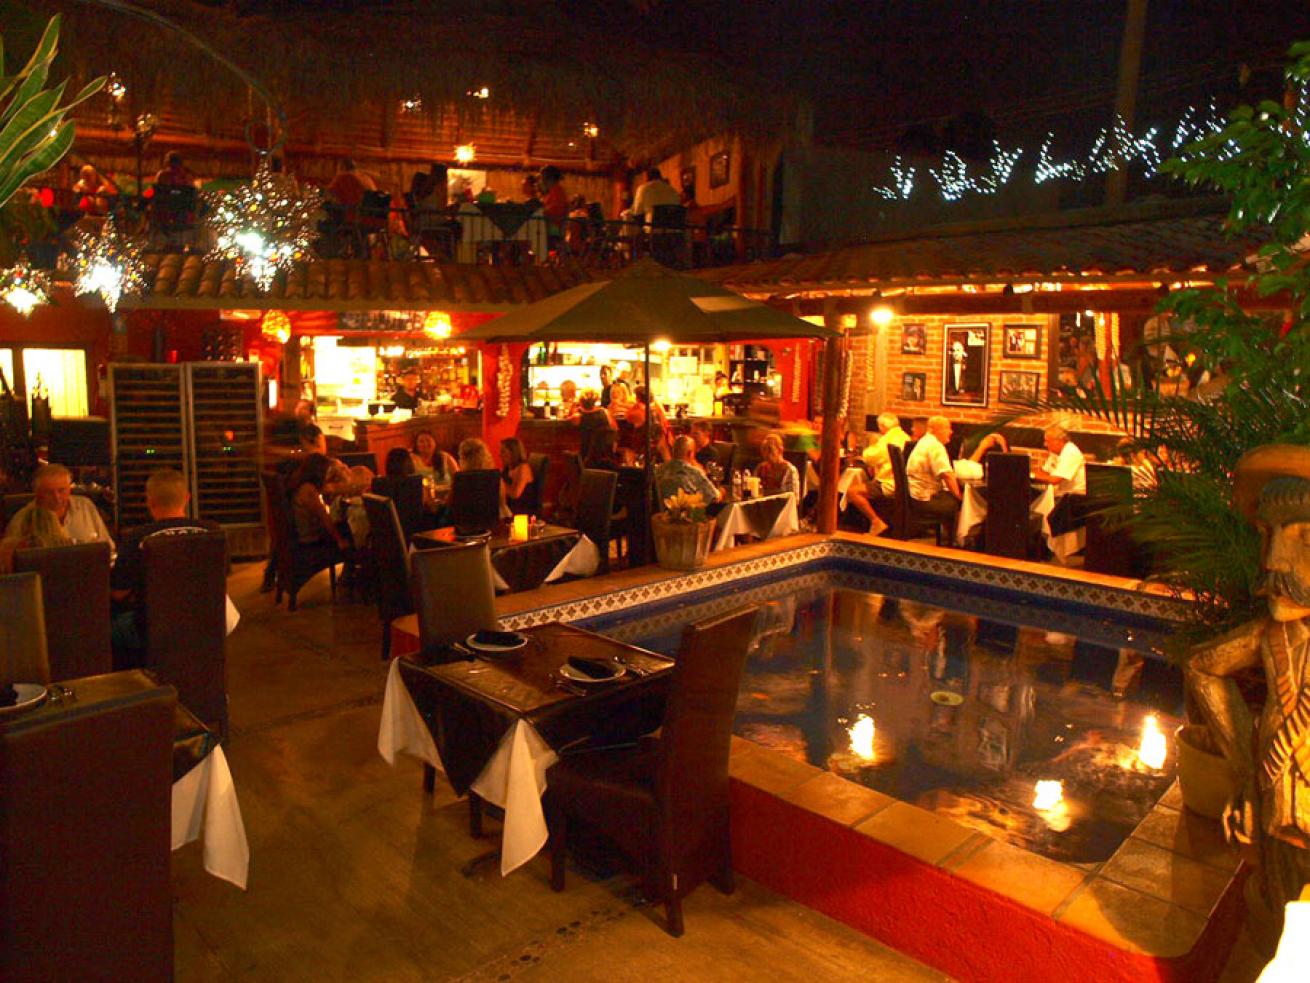 Mis Suenos Restaurant and Bar